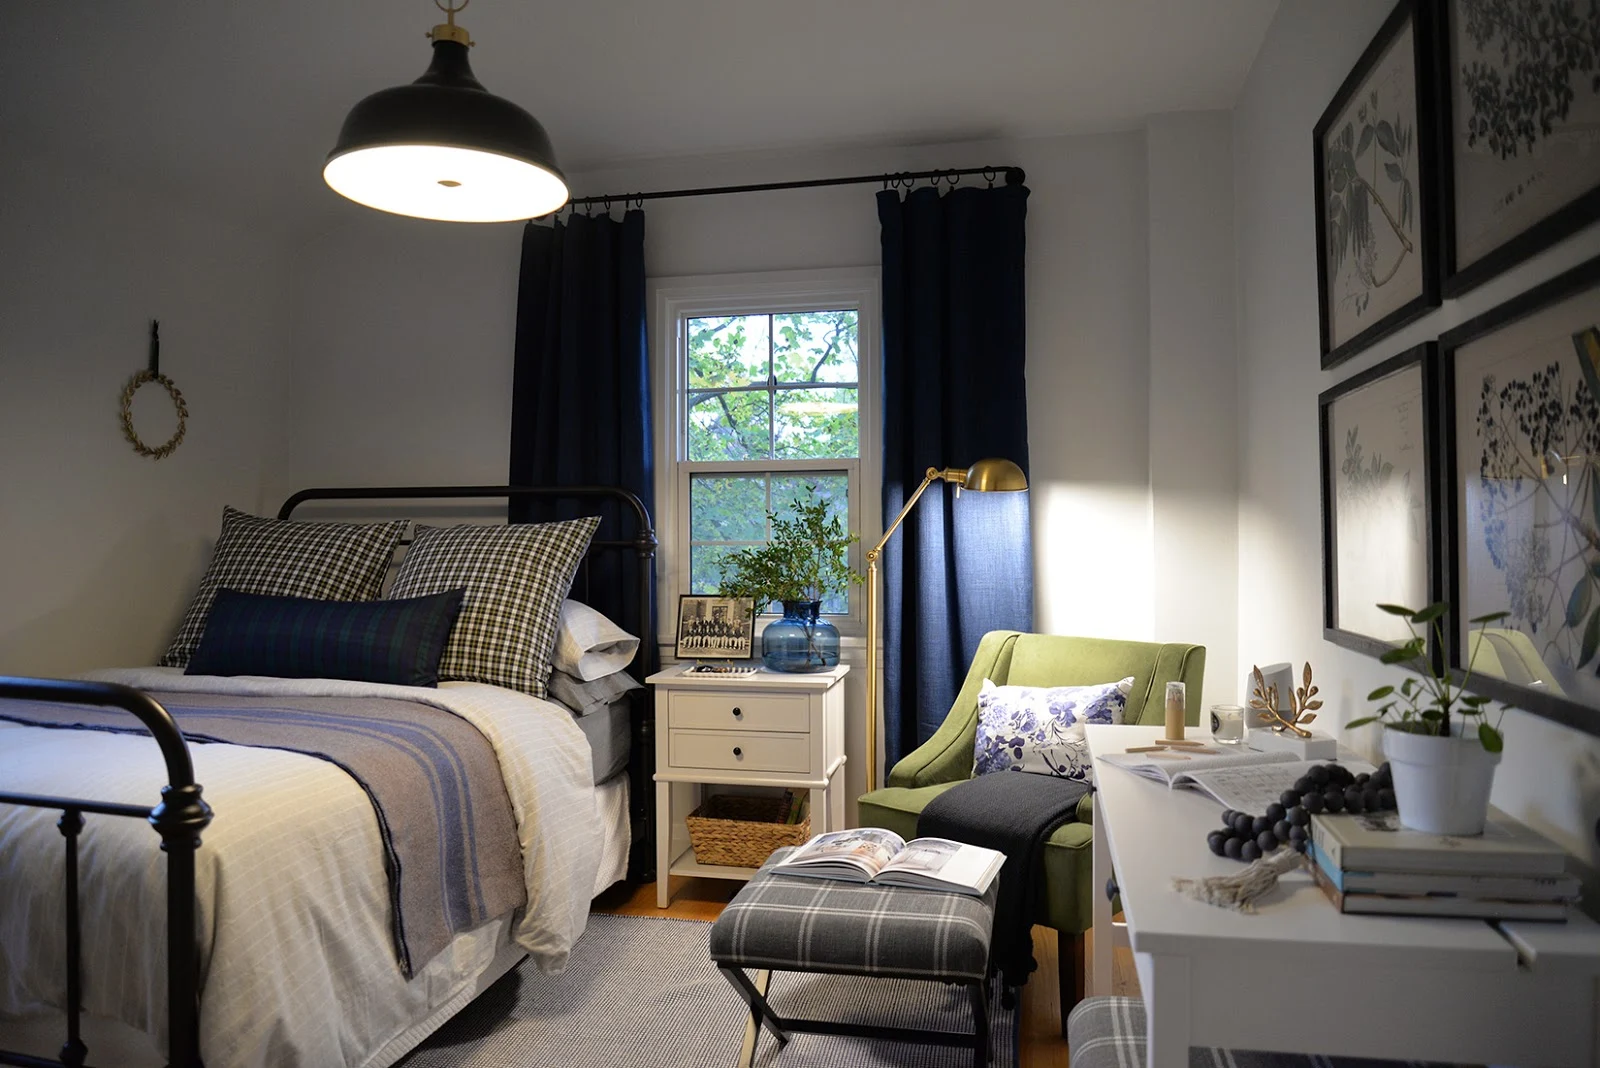 small guest bedroom ideas, cozy guest bedroom, guest bedroom closet, equestrian decor bedroom